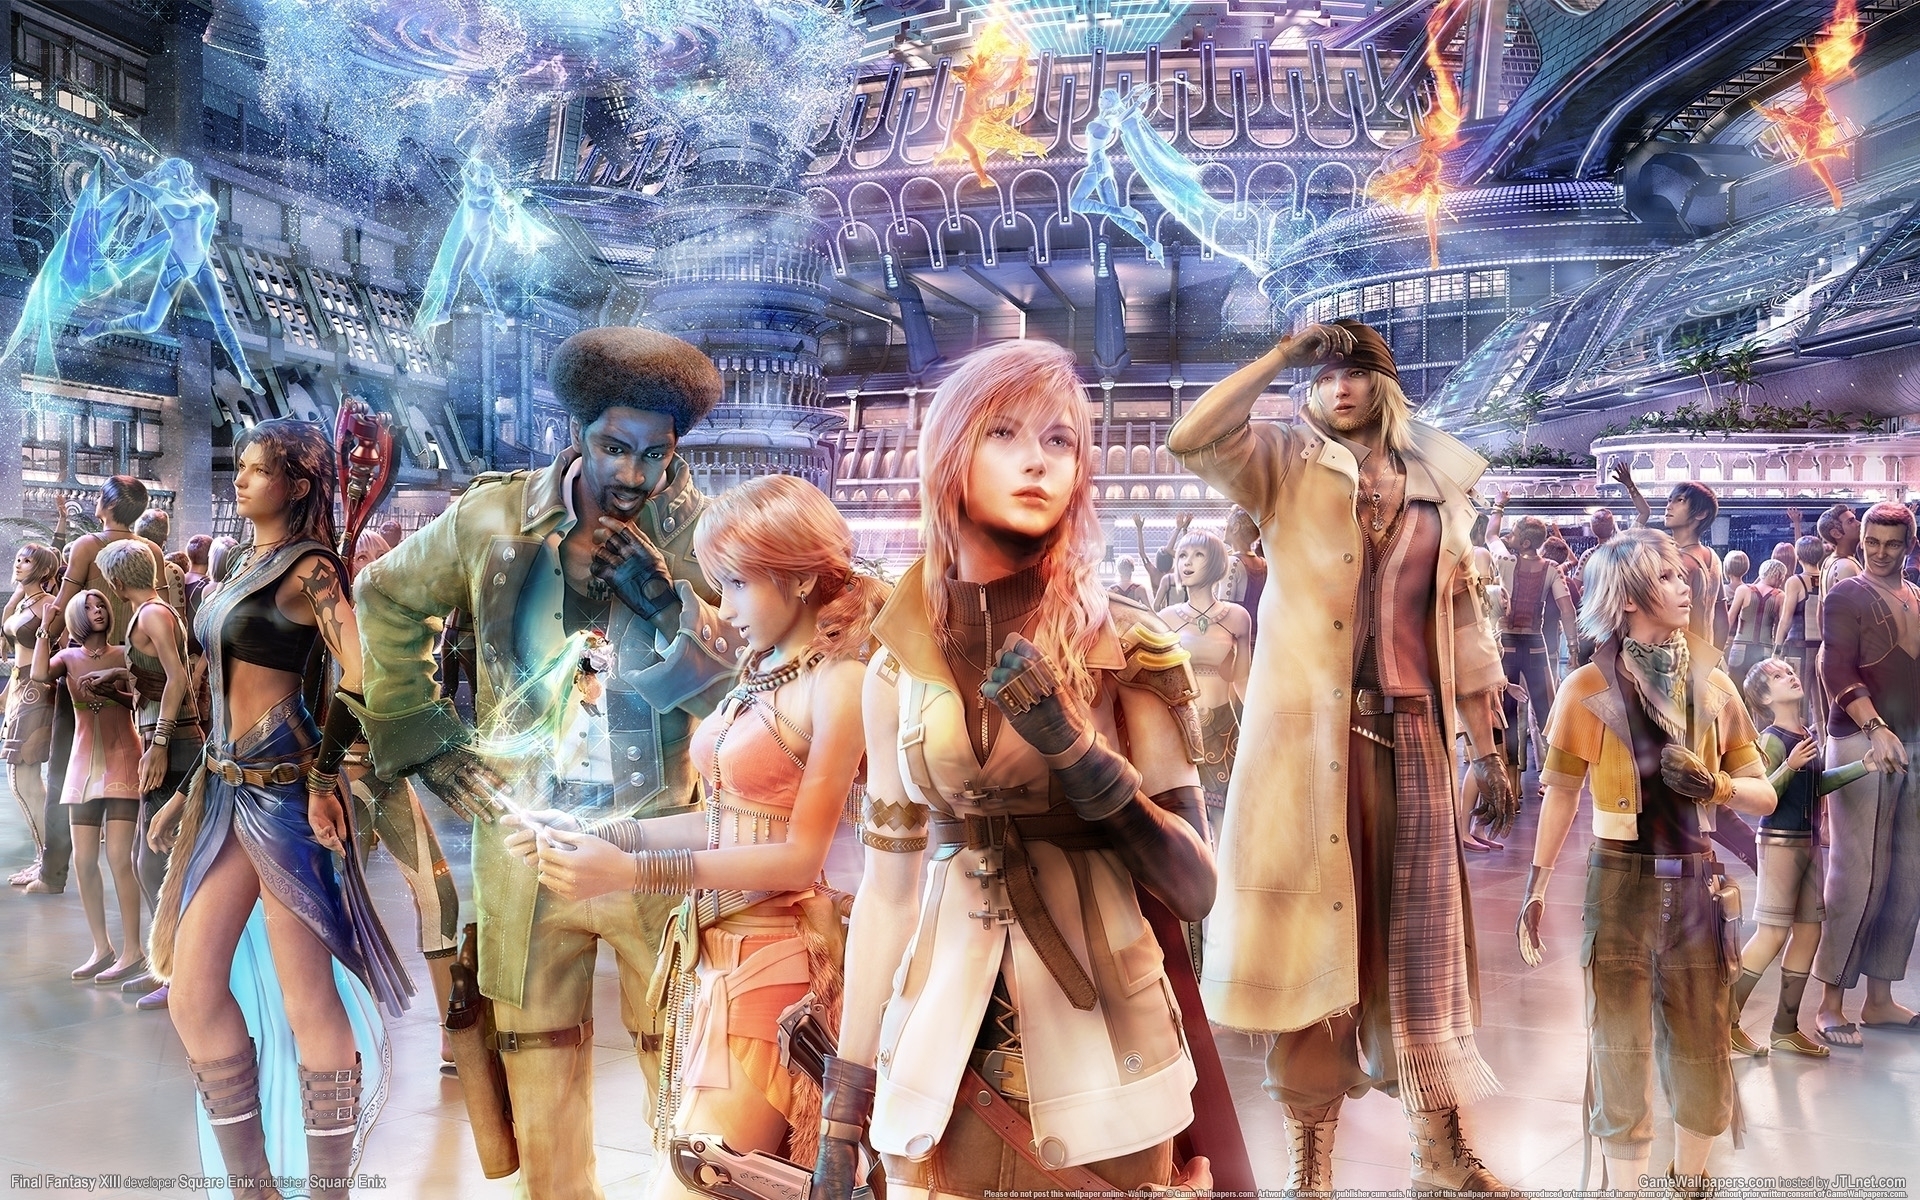 Final Fantasy XIII Wallpapers